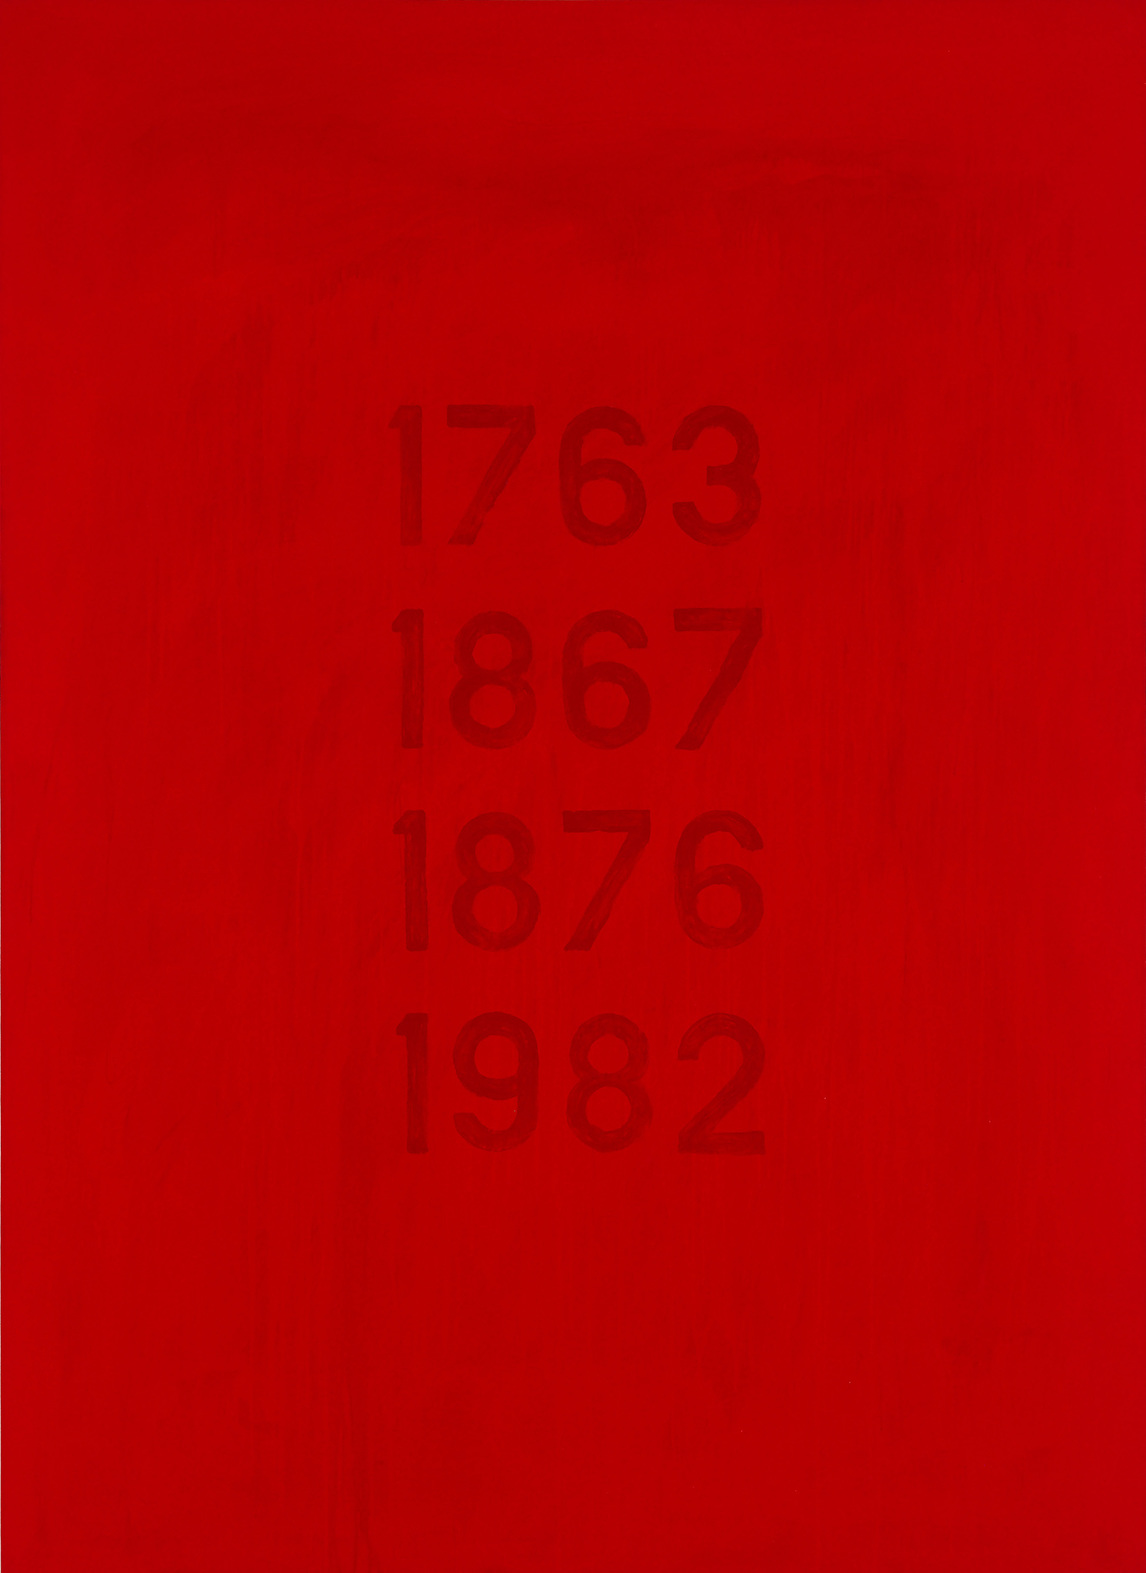 Aboriginal Title, 1989–90, by Robert Houle